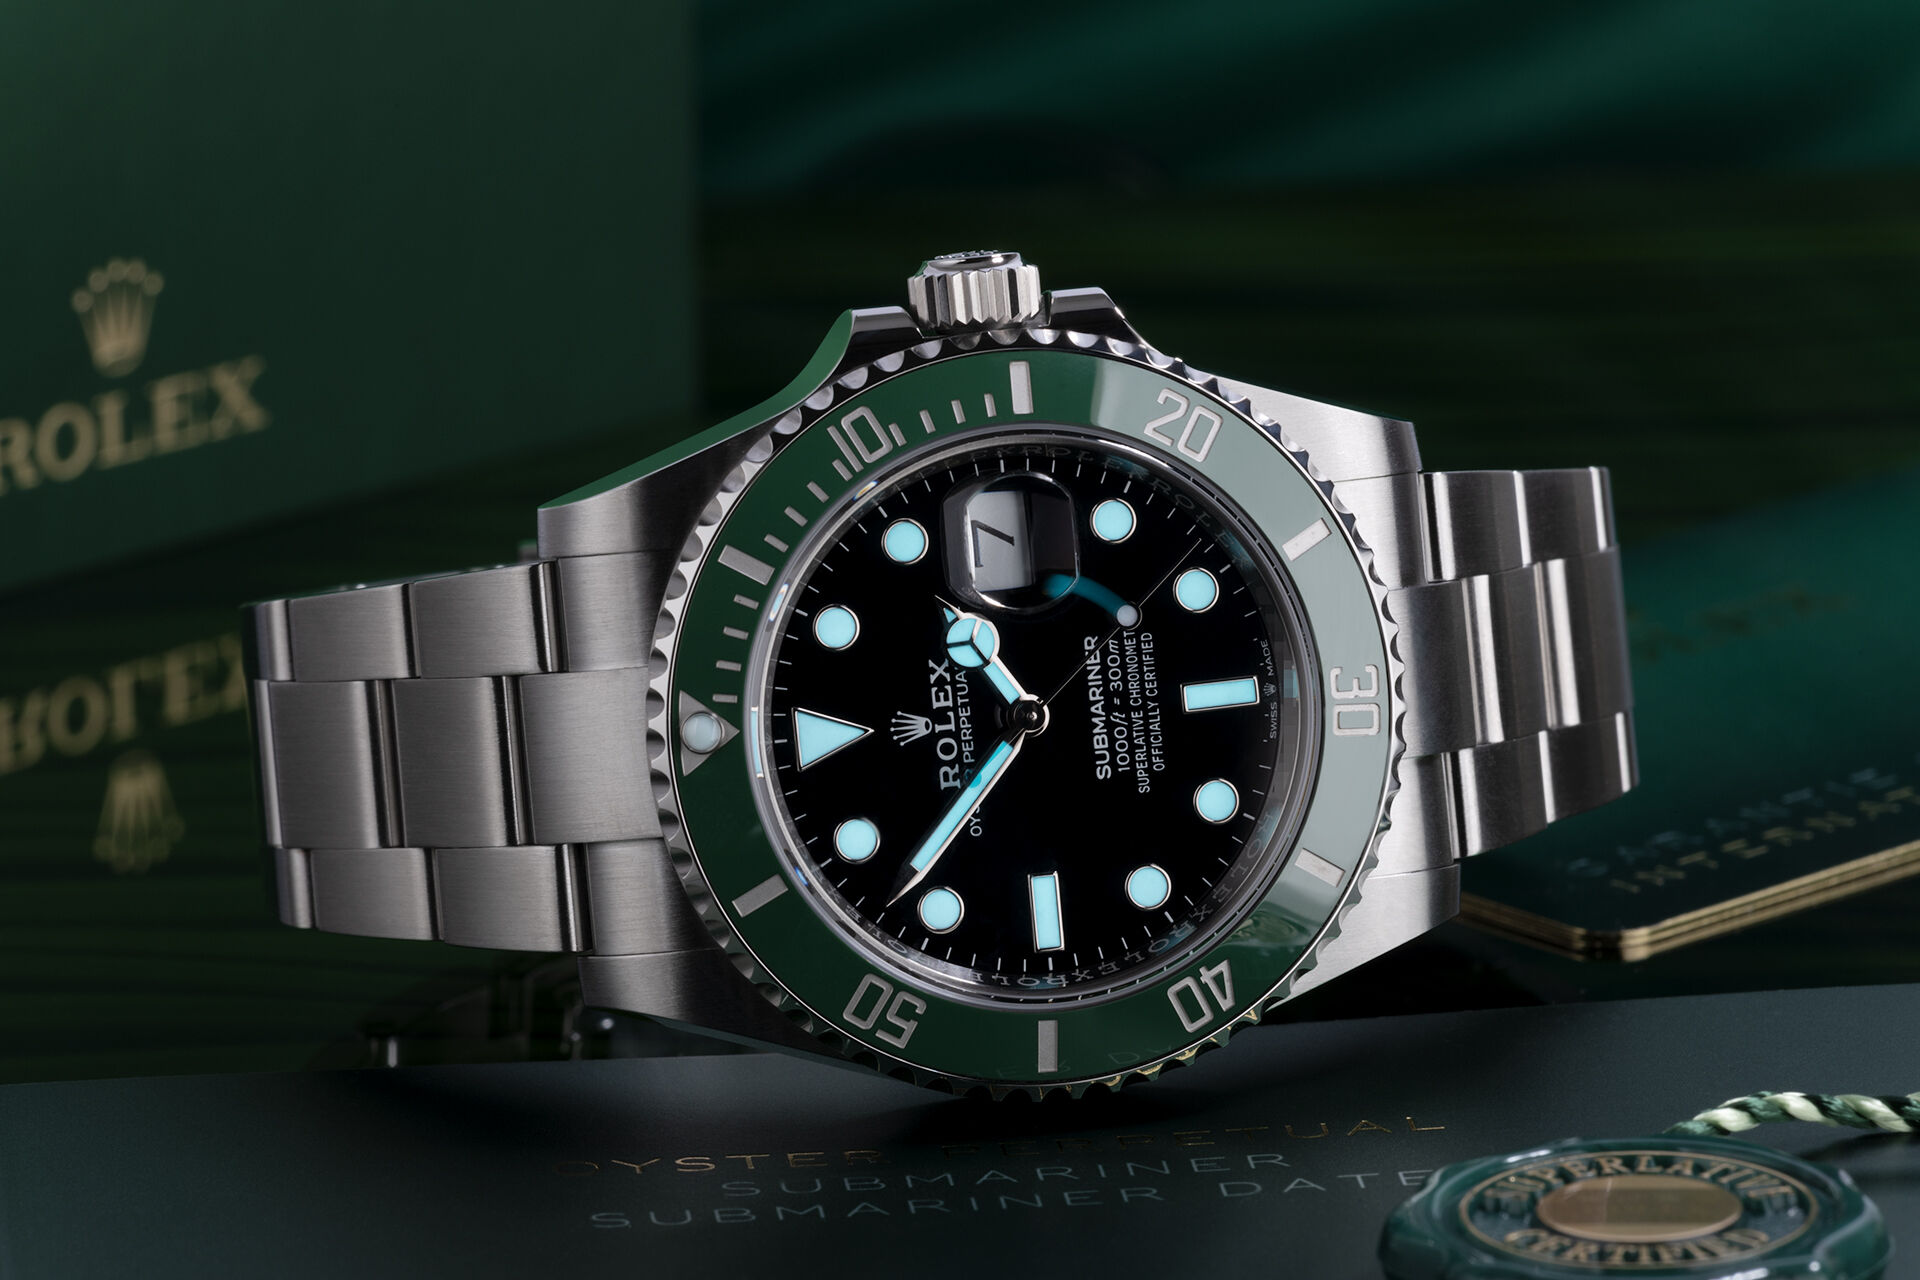 ref 126610LV | Latest Release | Rolex Submariner Date